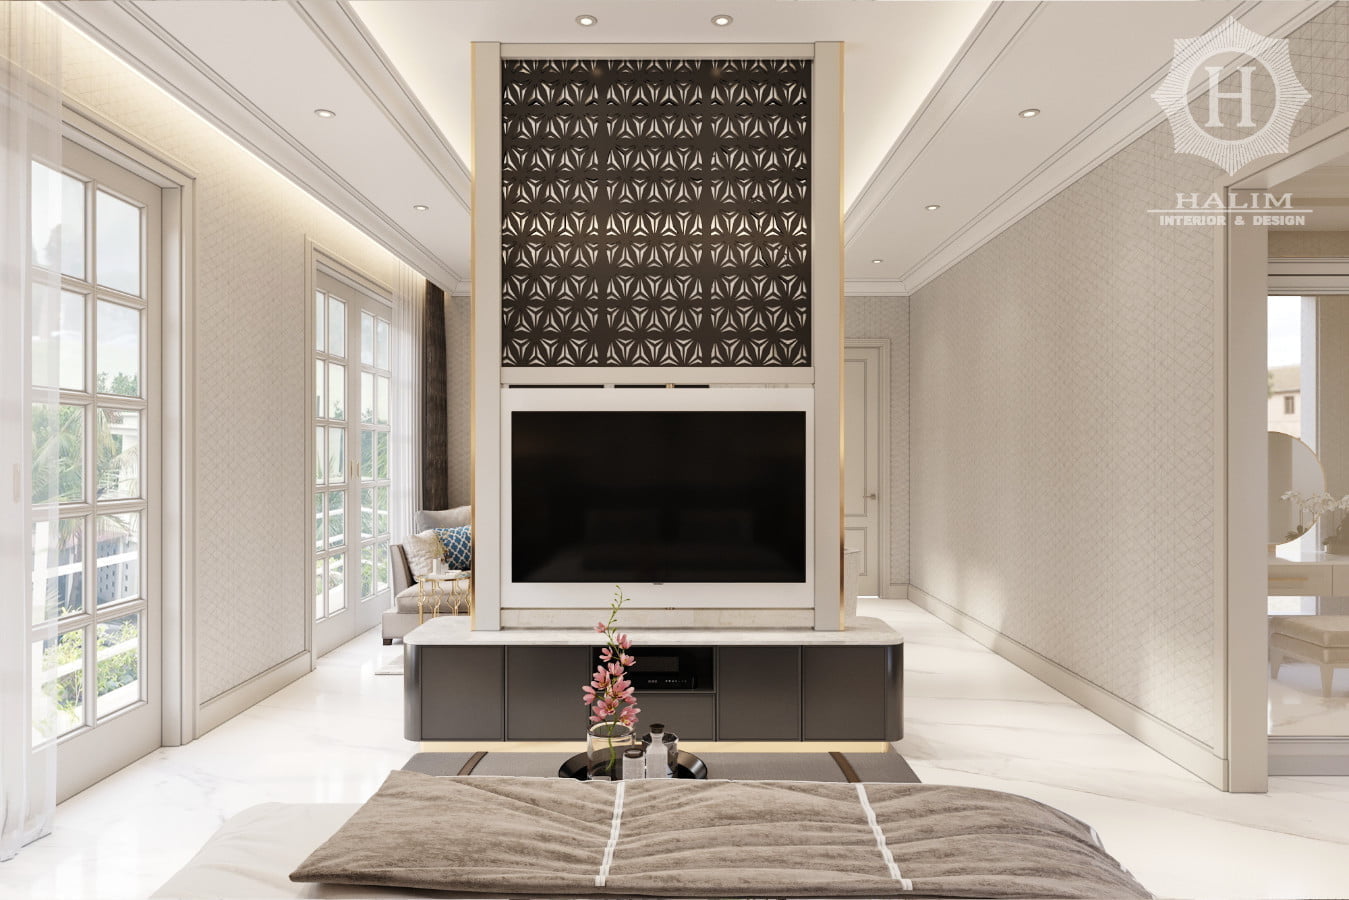 Halim Interior modern furniture contemporer american style minimalist european classic surabaya 15 oktober 2021 new 12